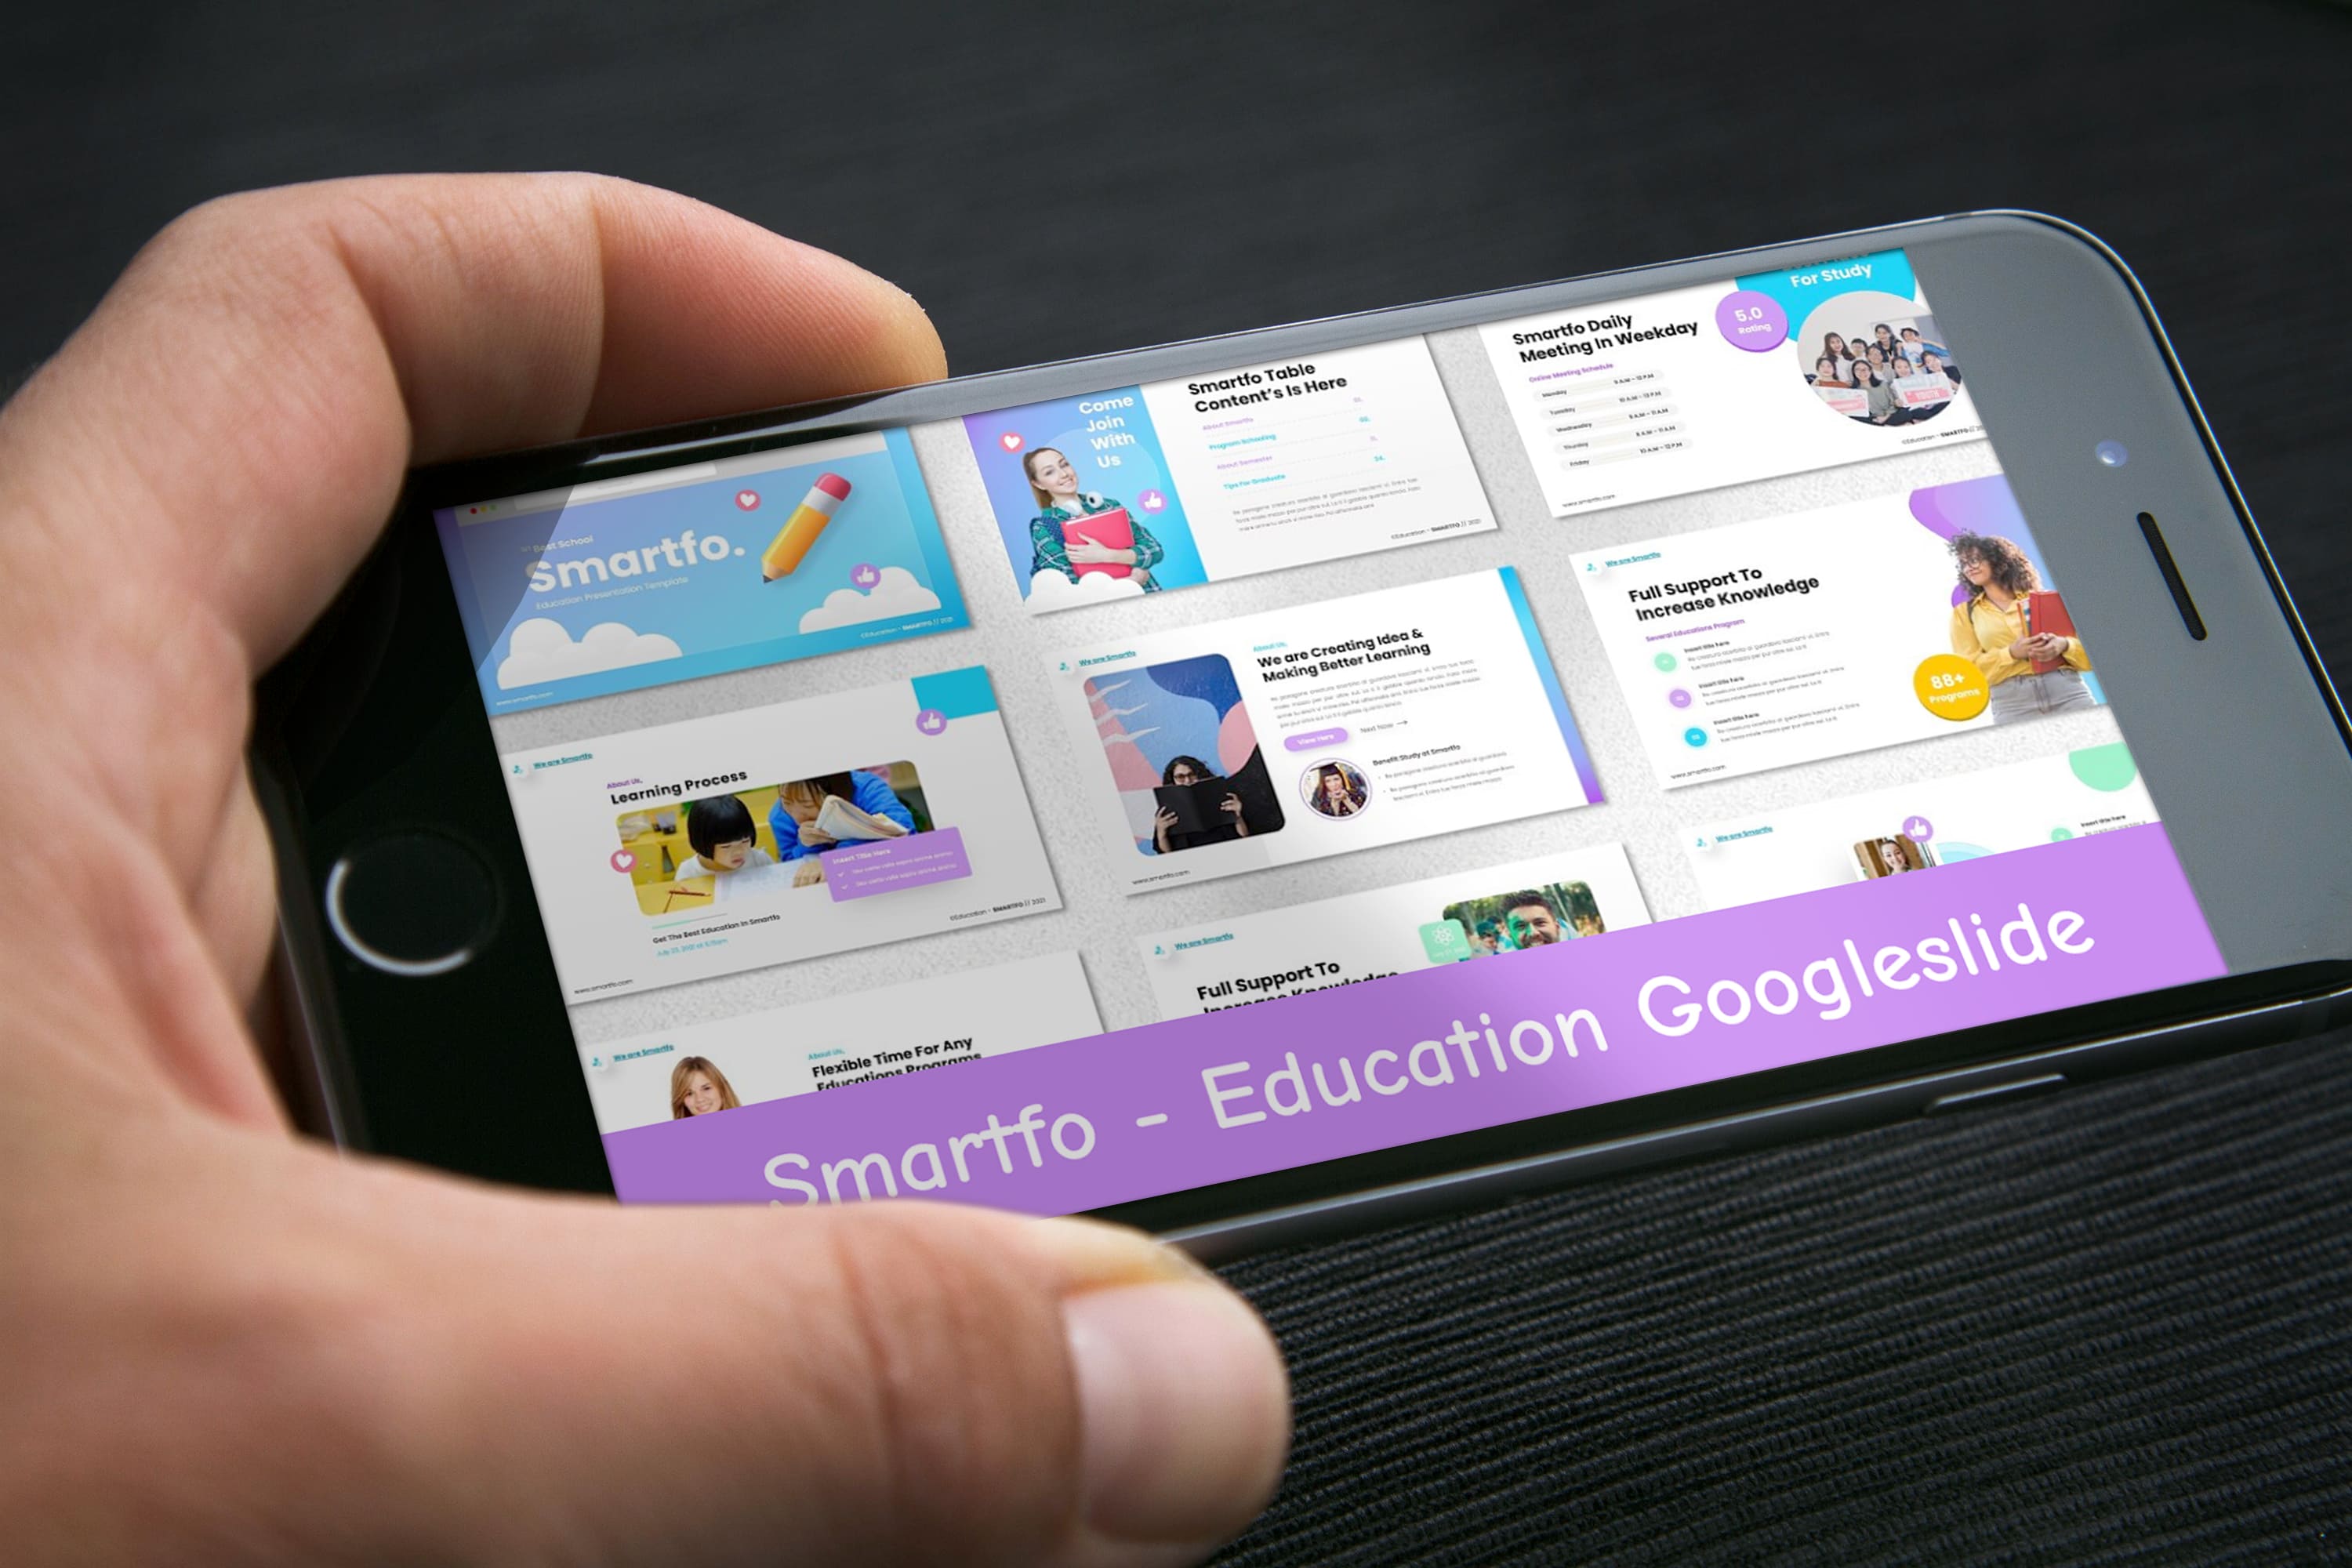 Smartfo - Education Googleslide - Mockup on Smartphone.